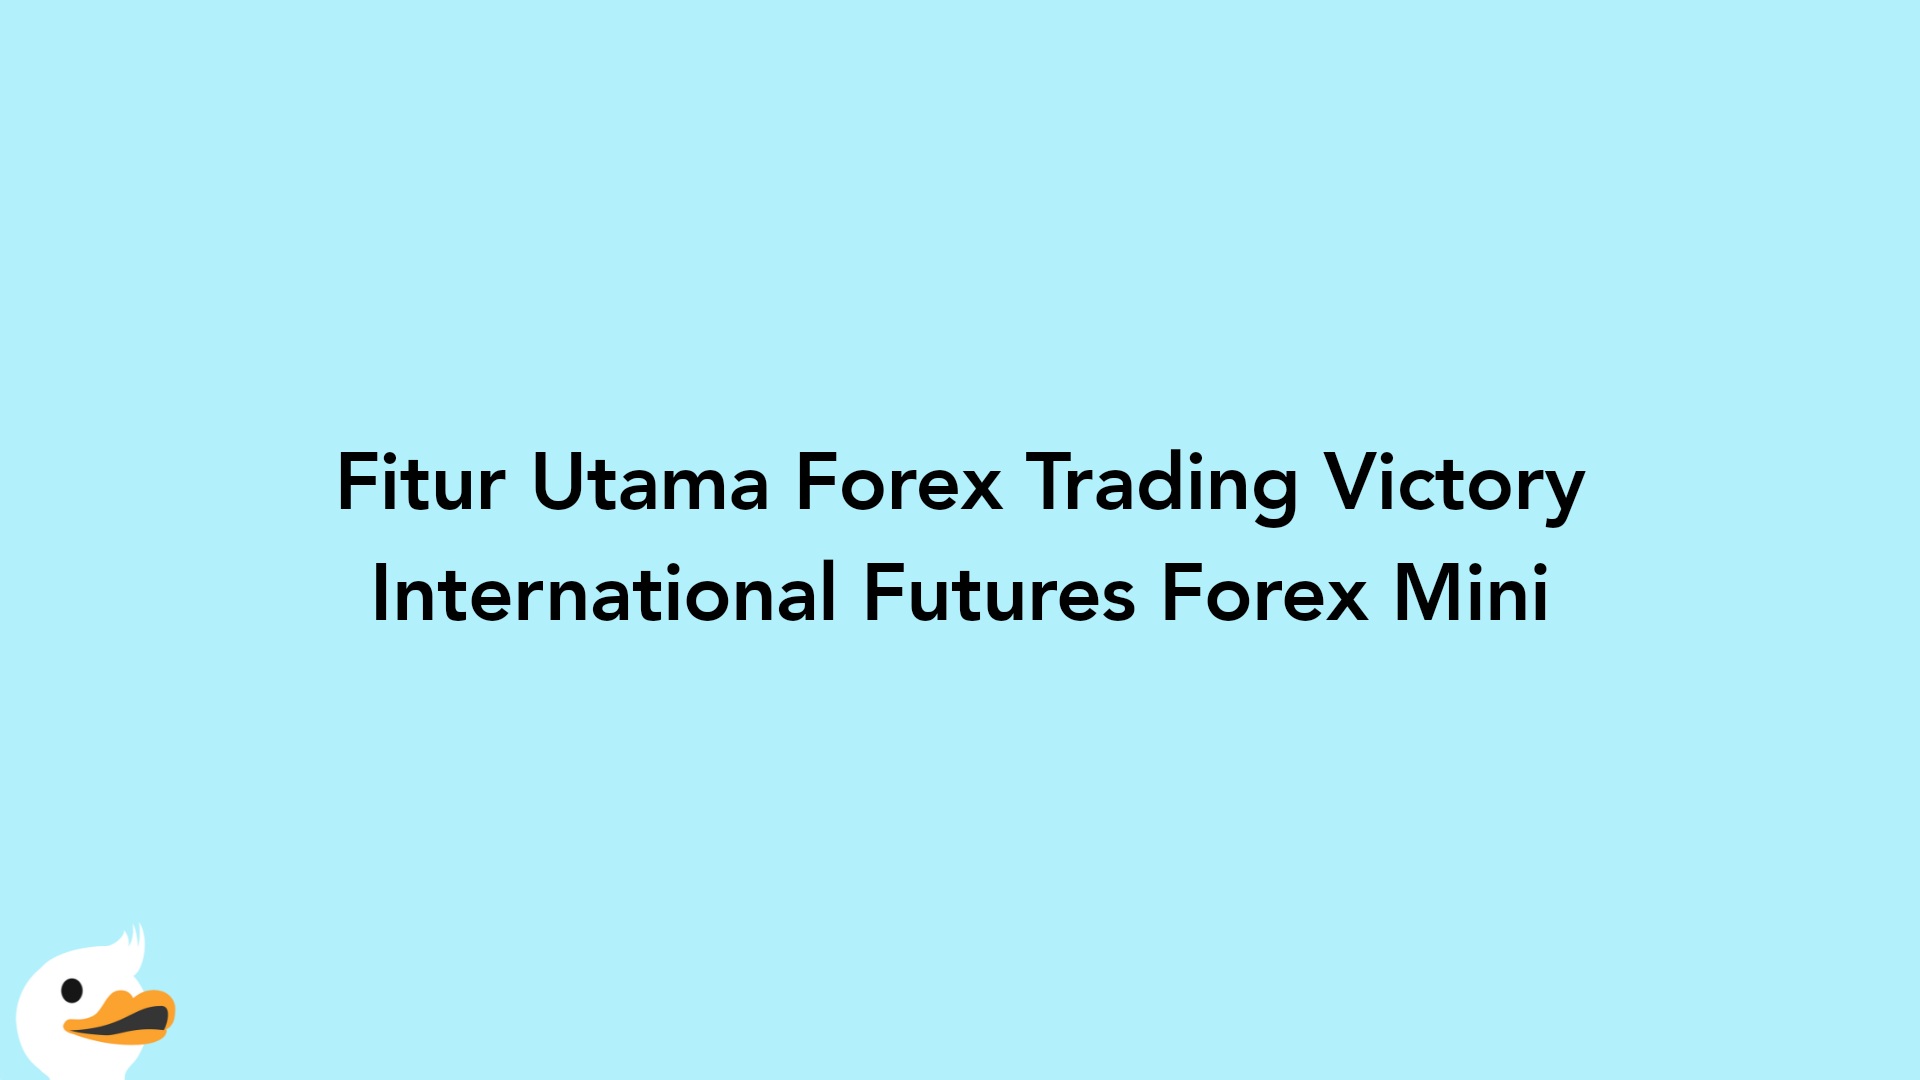 Fitur Utama Forex Trading Victory International Futures Forex Mini